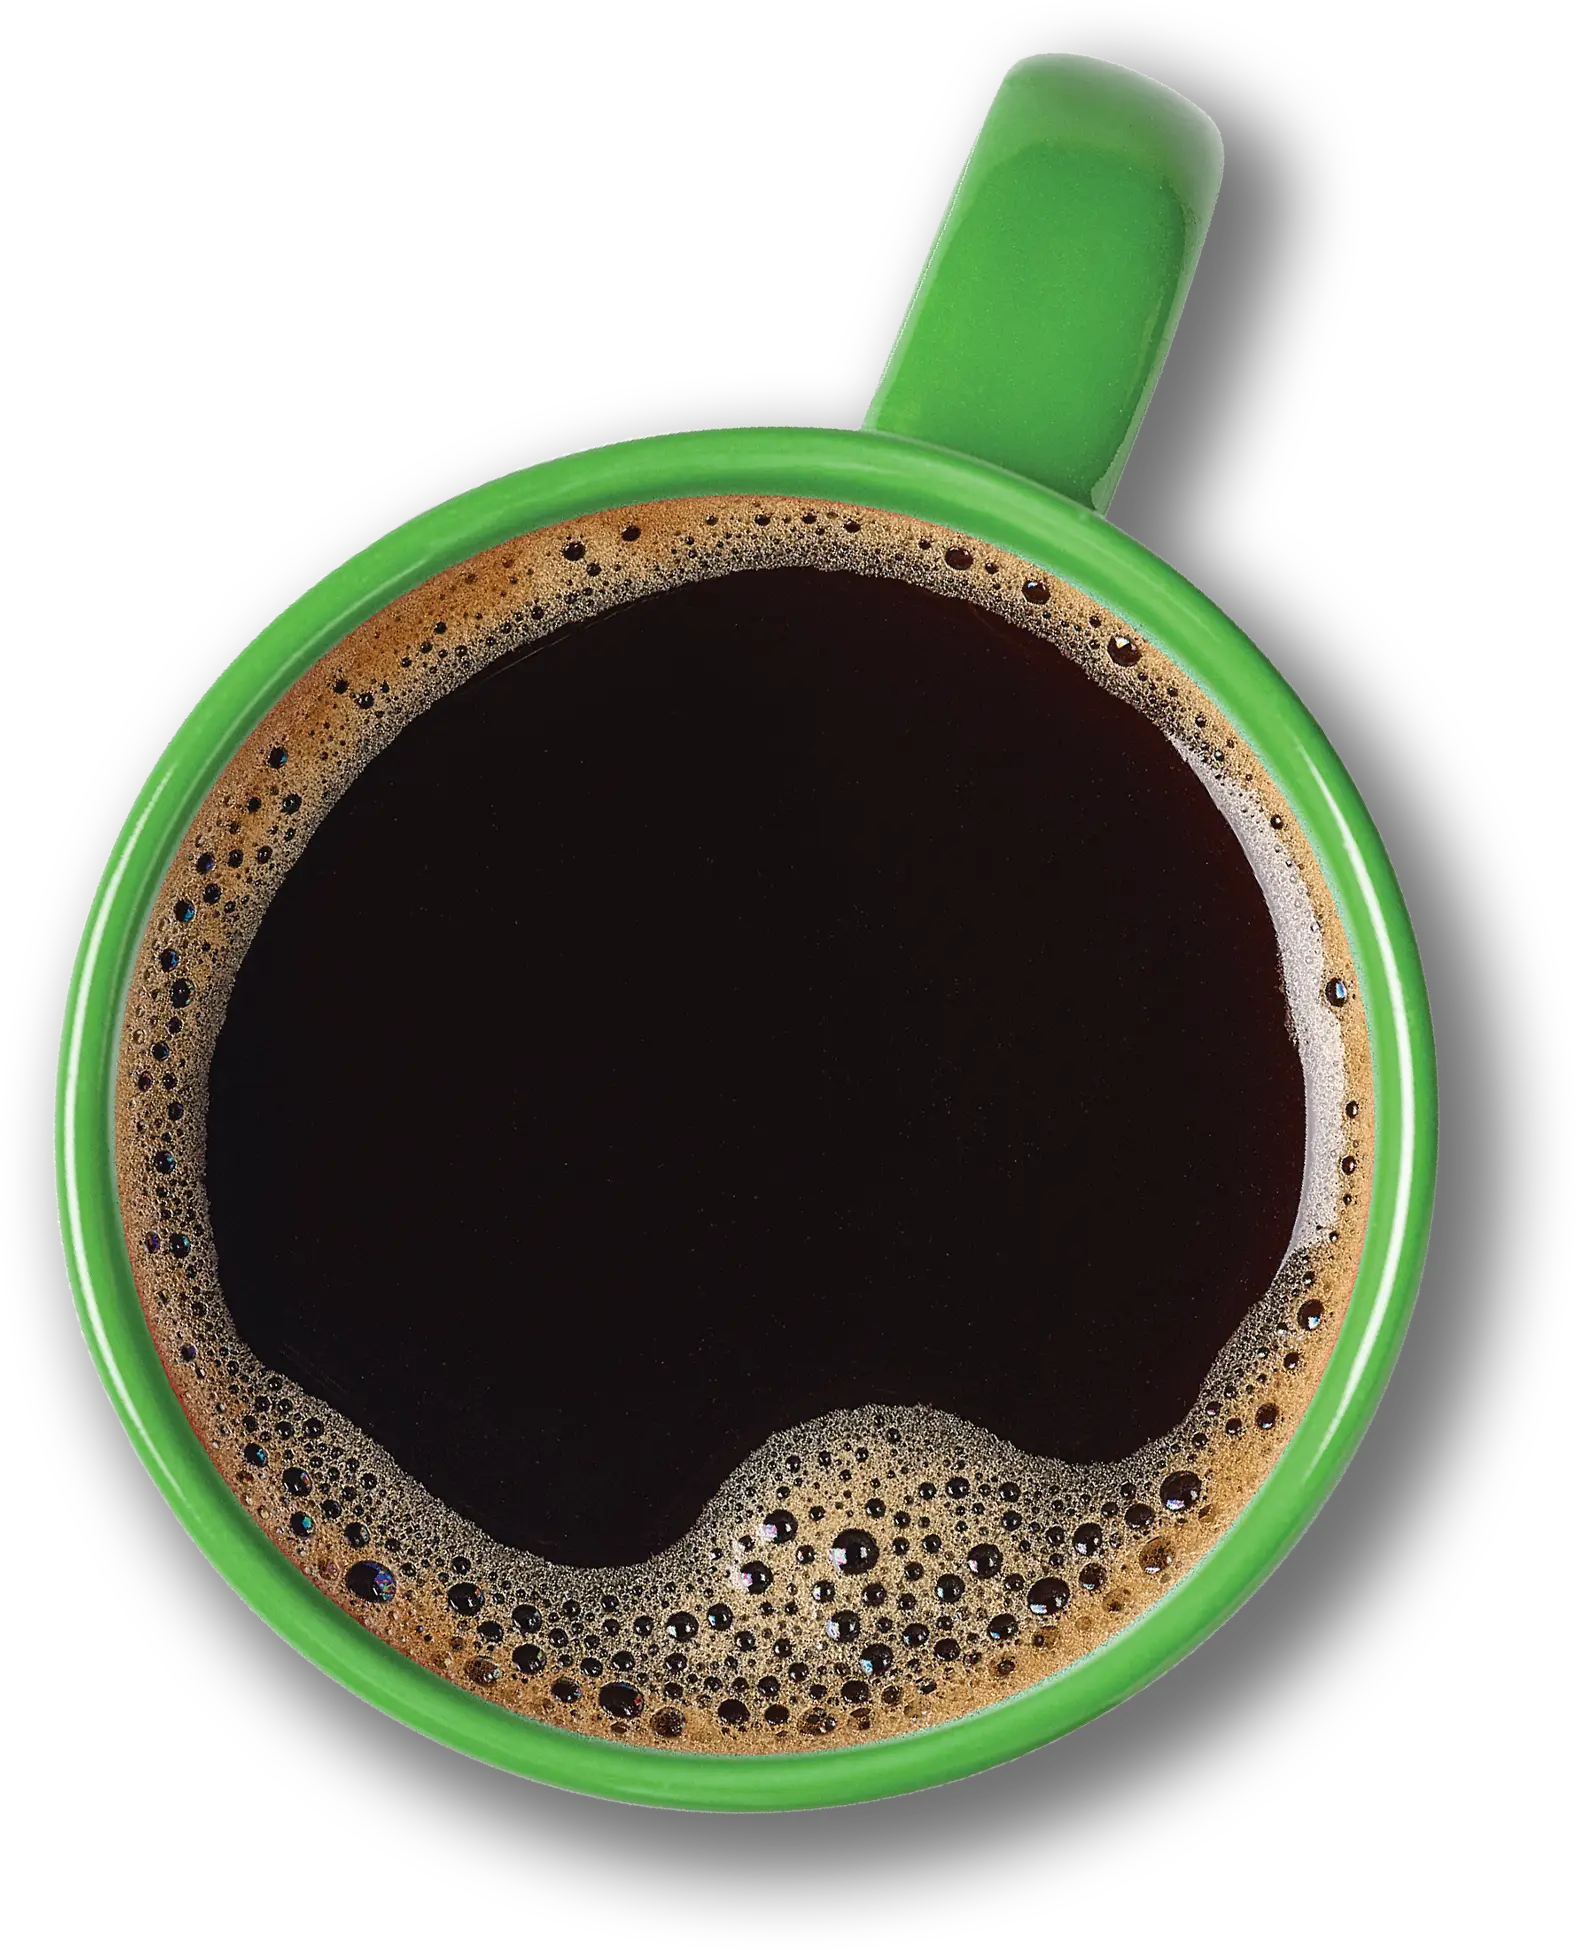 Cup of black coffee in green mug